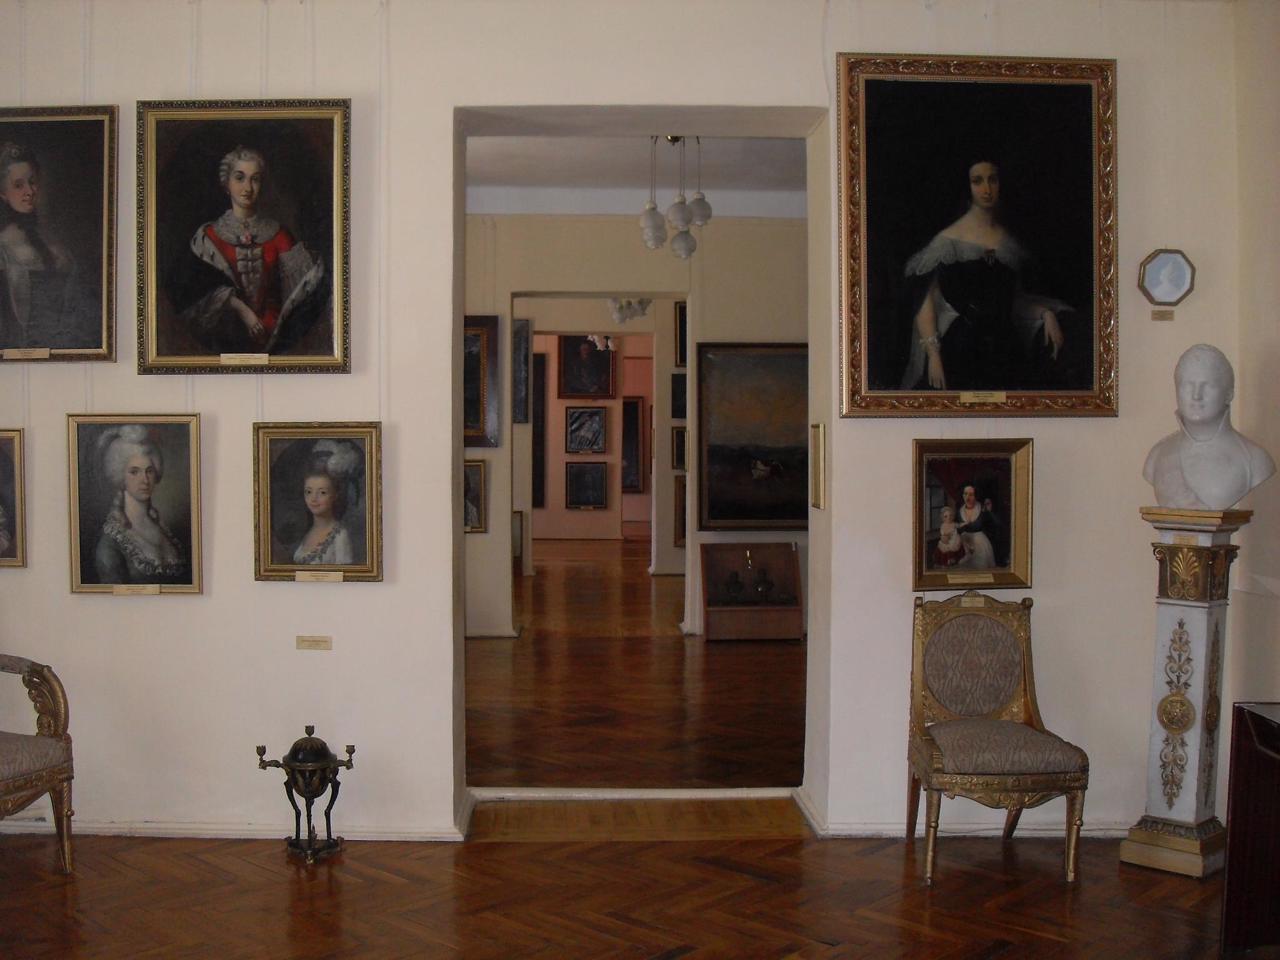 Vinnytsia Regional Art Museum